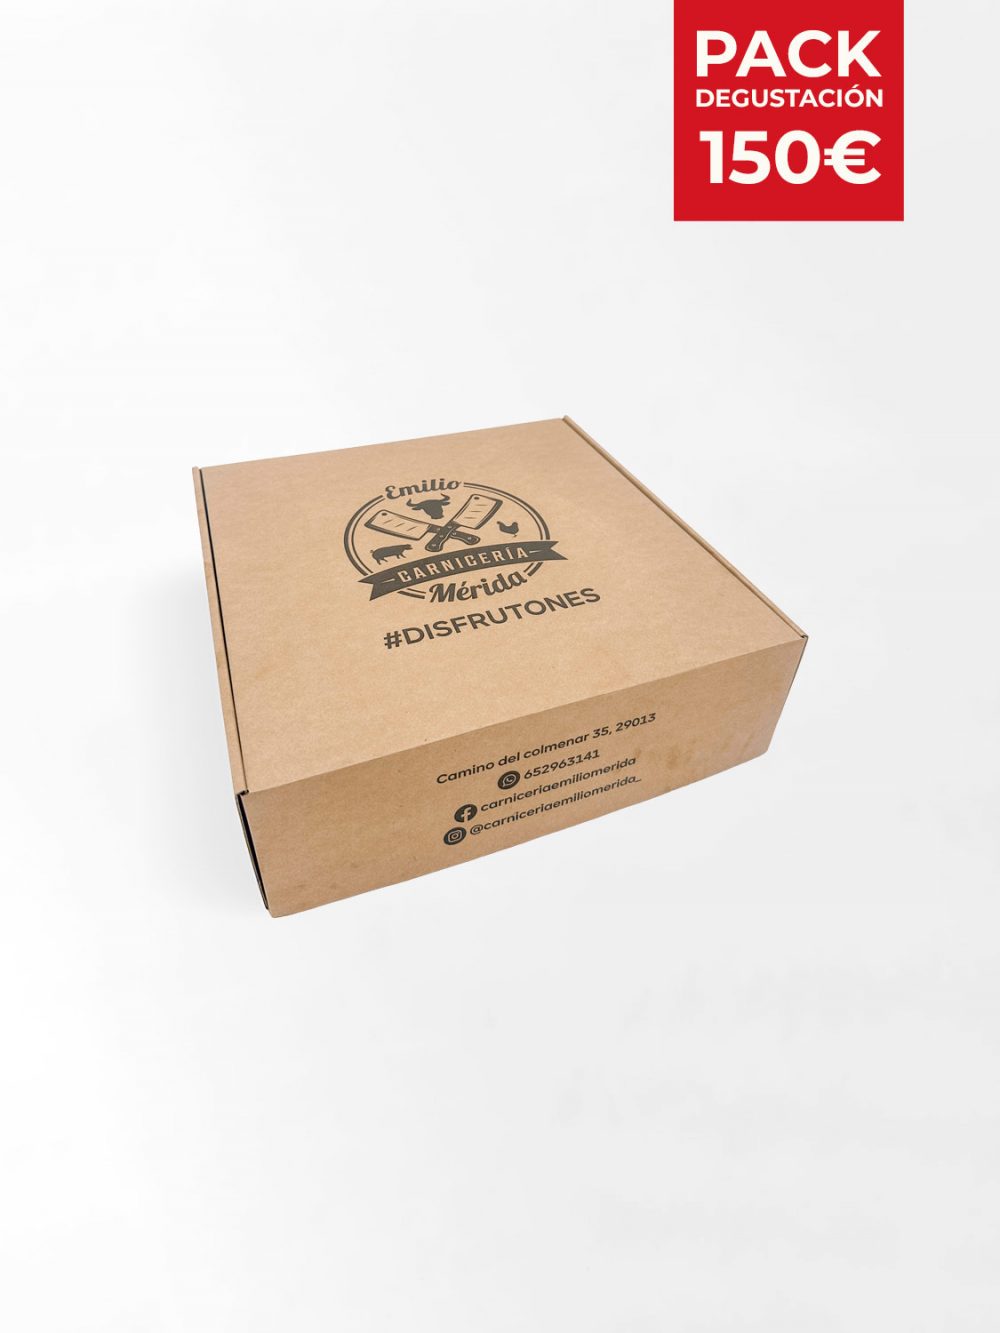 Pack Degustación - 150€ (Incluye 250gr Wagyu Japonés)